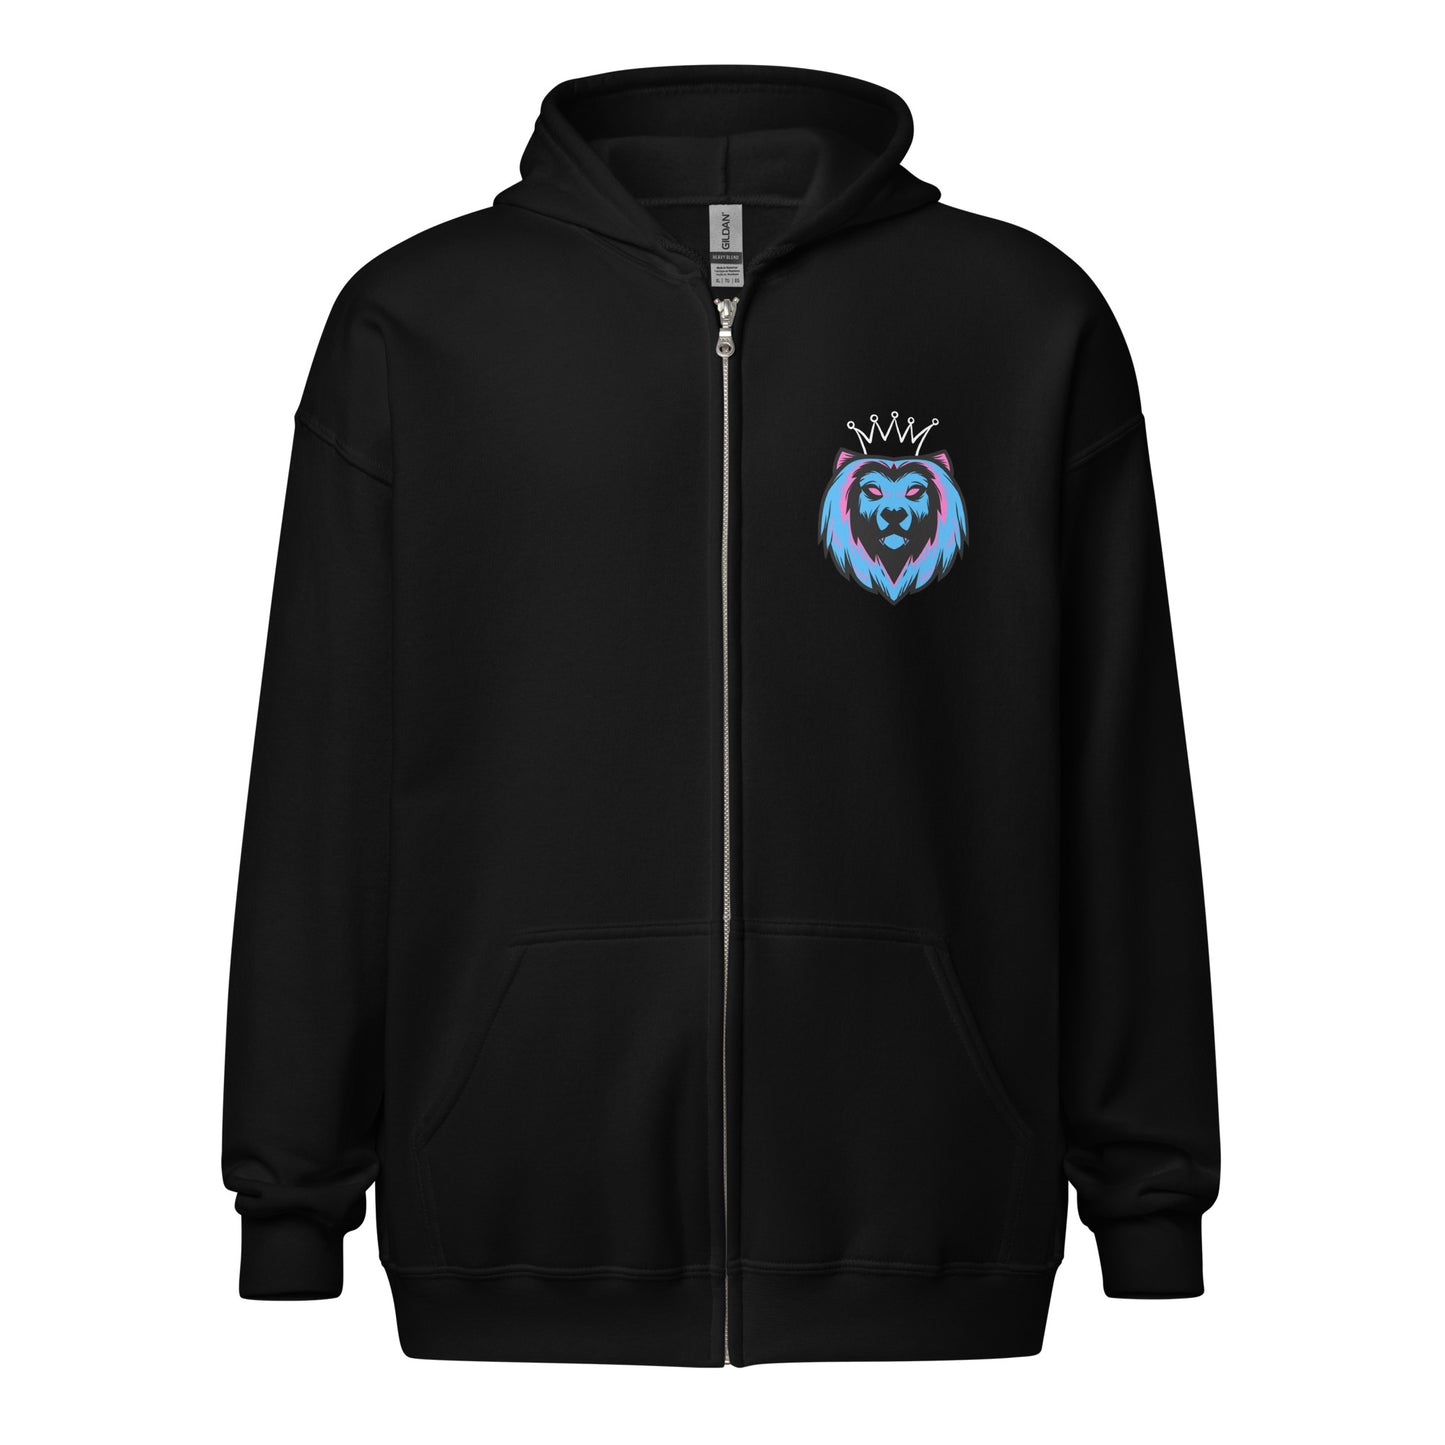 CC Lion zip hoodie